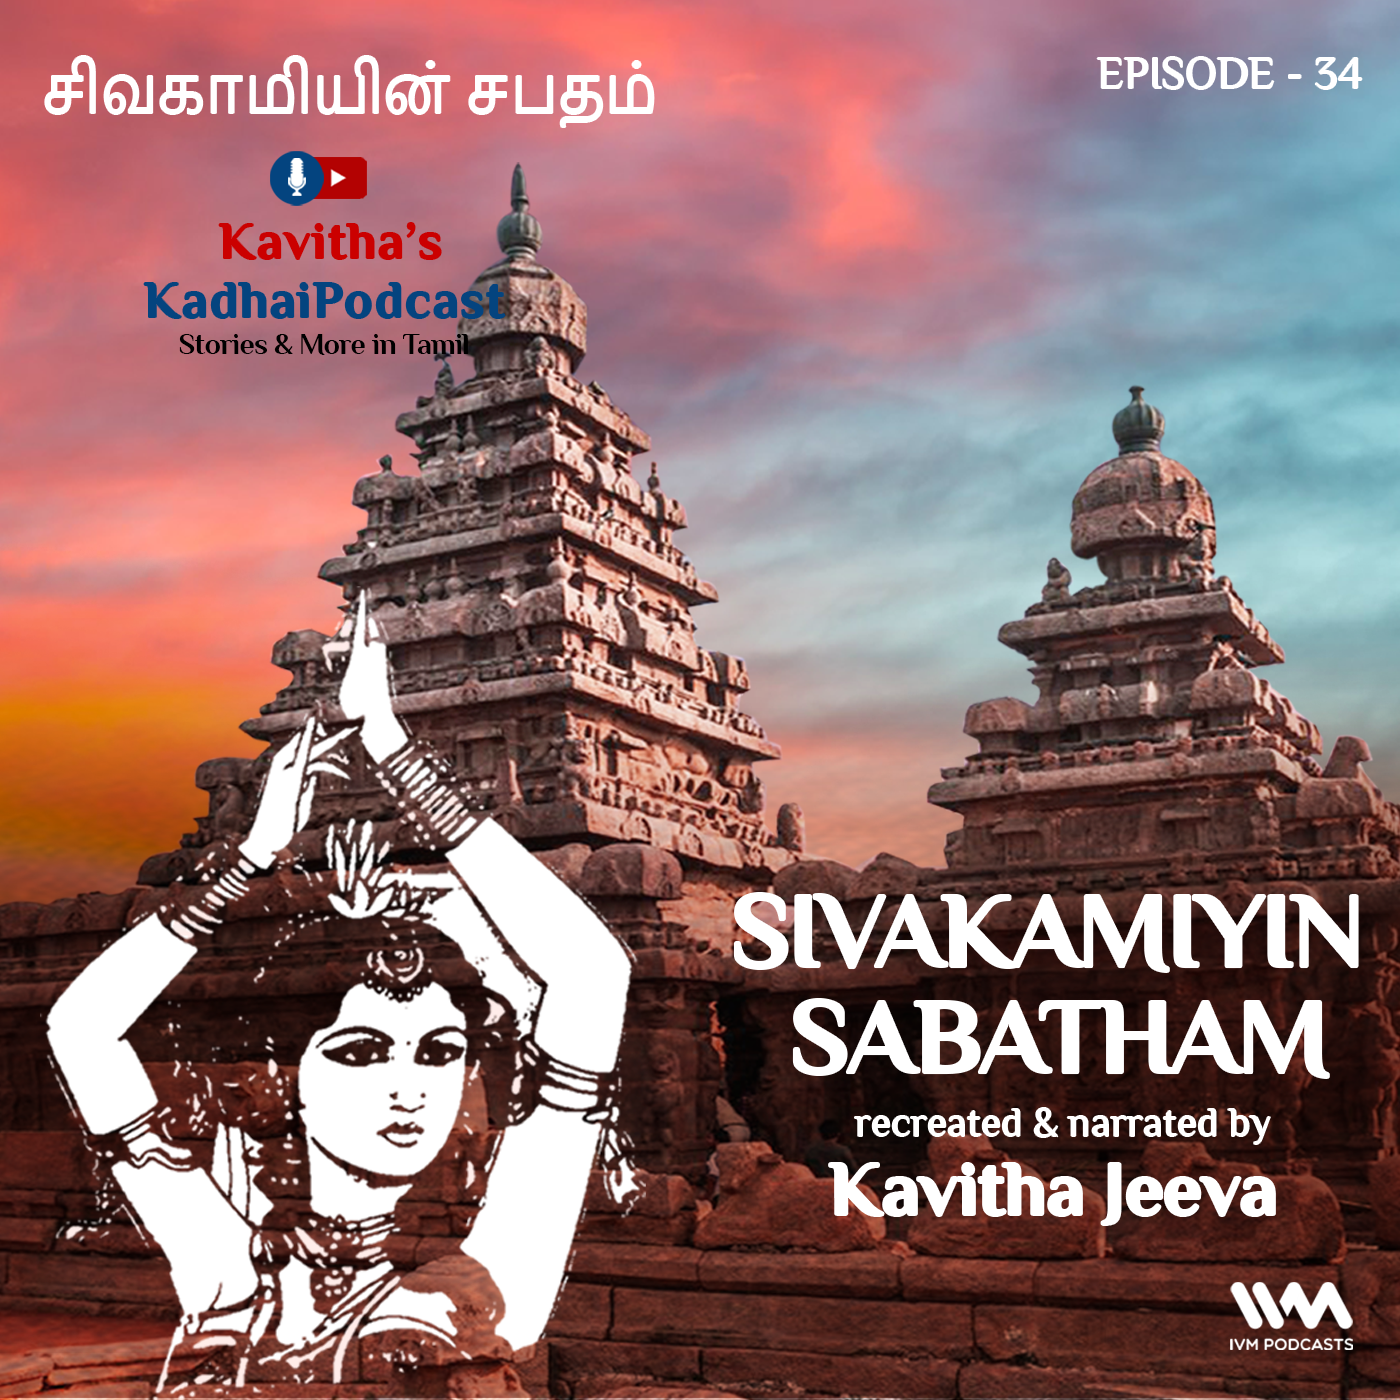 KadhaiPodcast's Sivakamiyin Sabatham - Episode # 34